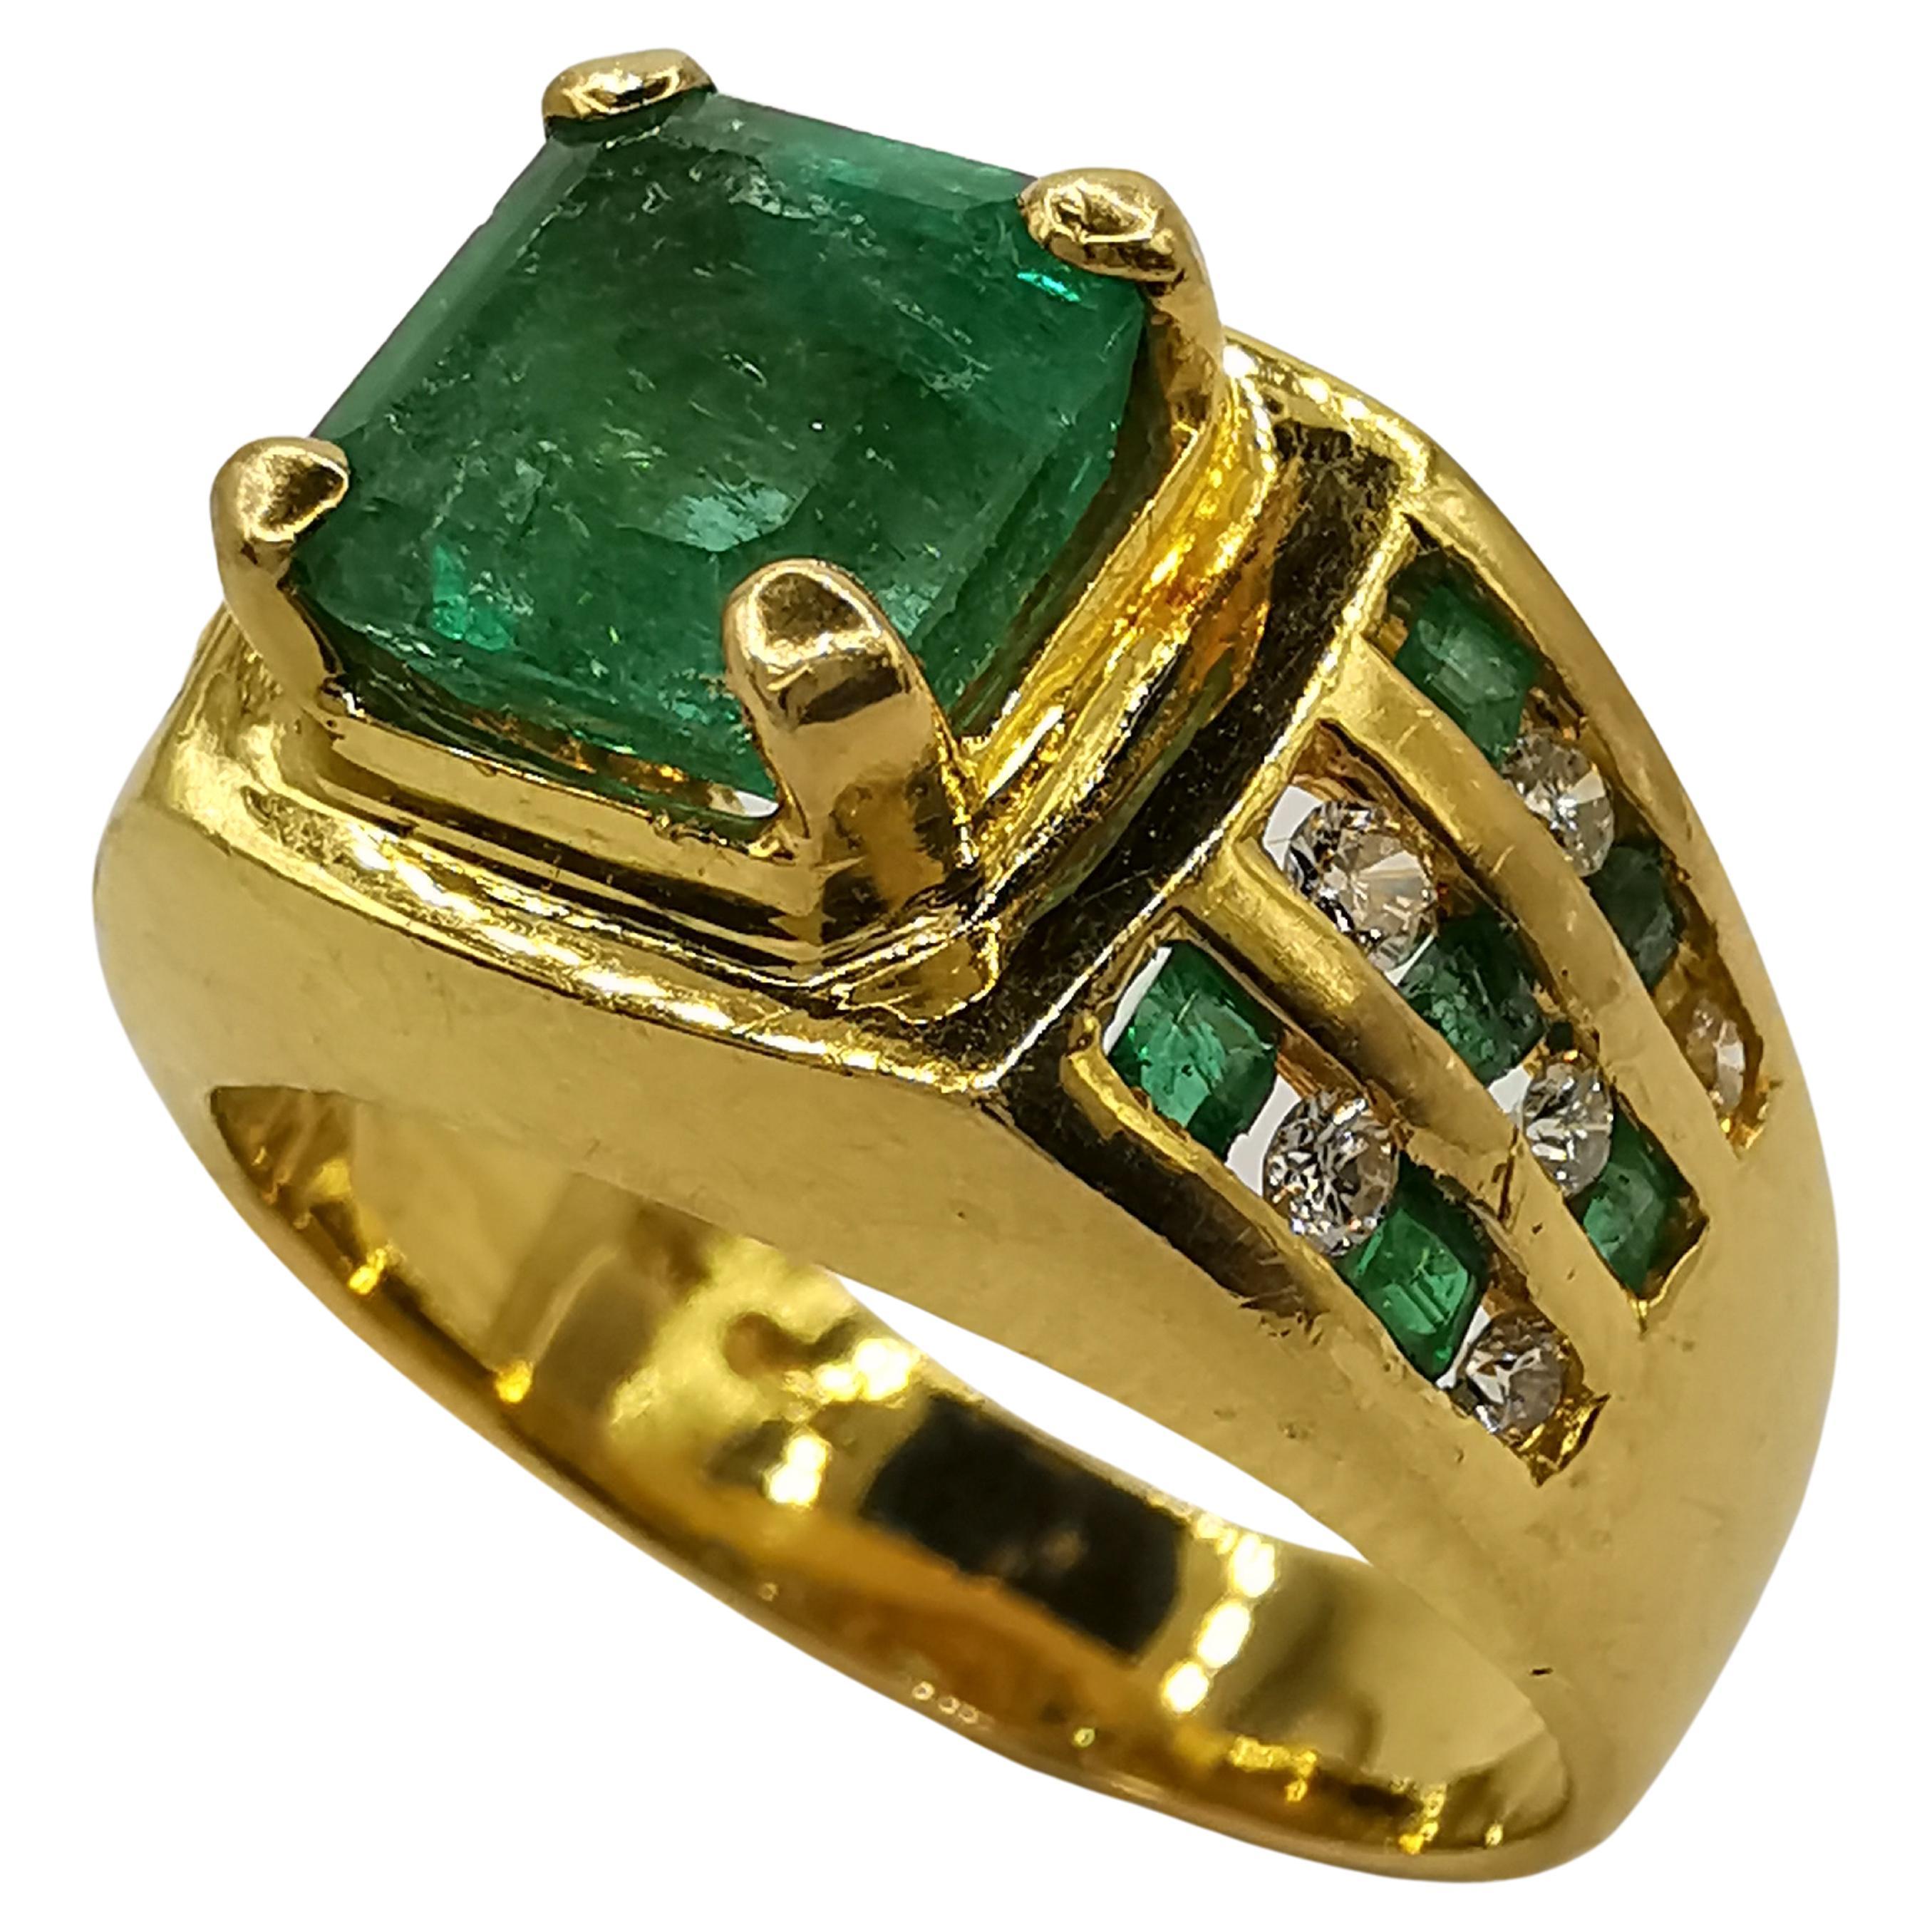 2.07 Carat Emerald Cut Emerald & Diamond Art Deco Men's Ring in 18K Yellow Gold